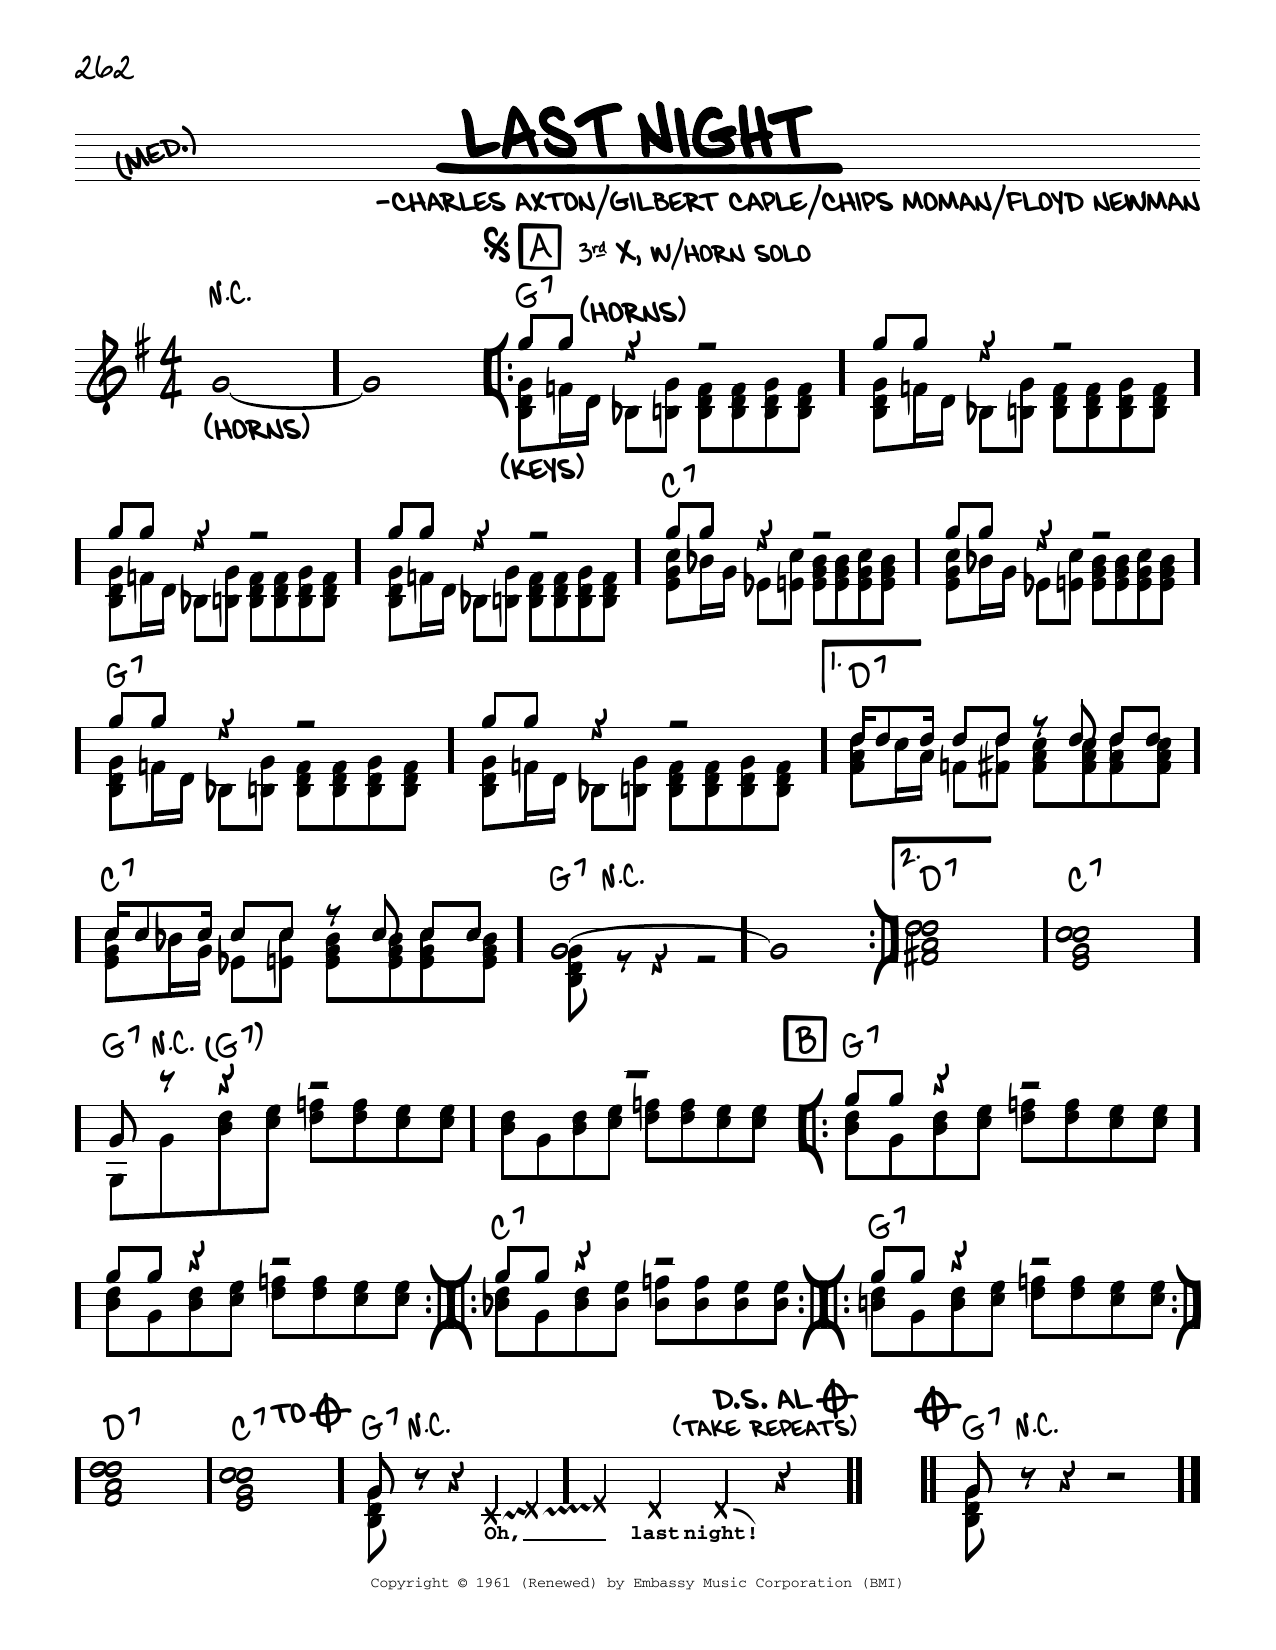 The Mar-Keys Last Night sheet music notes and chords arranged for Guitar Chords/Lyrics